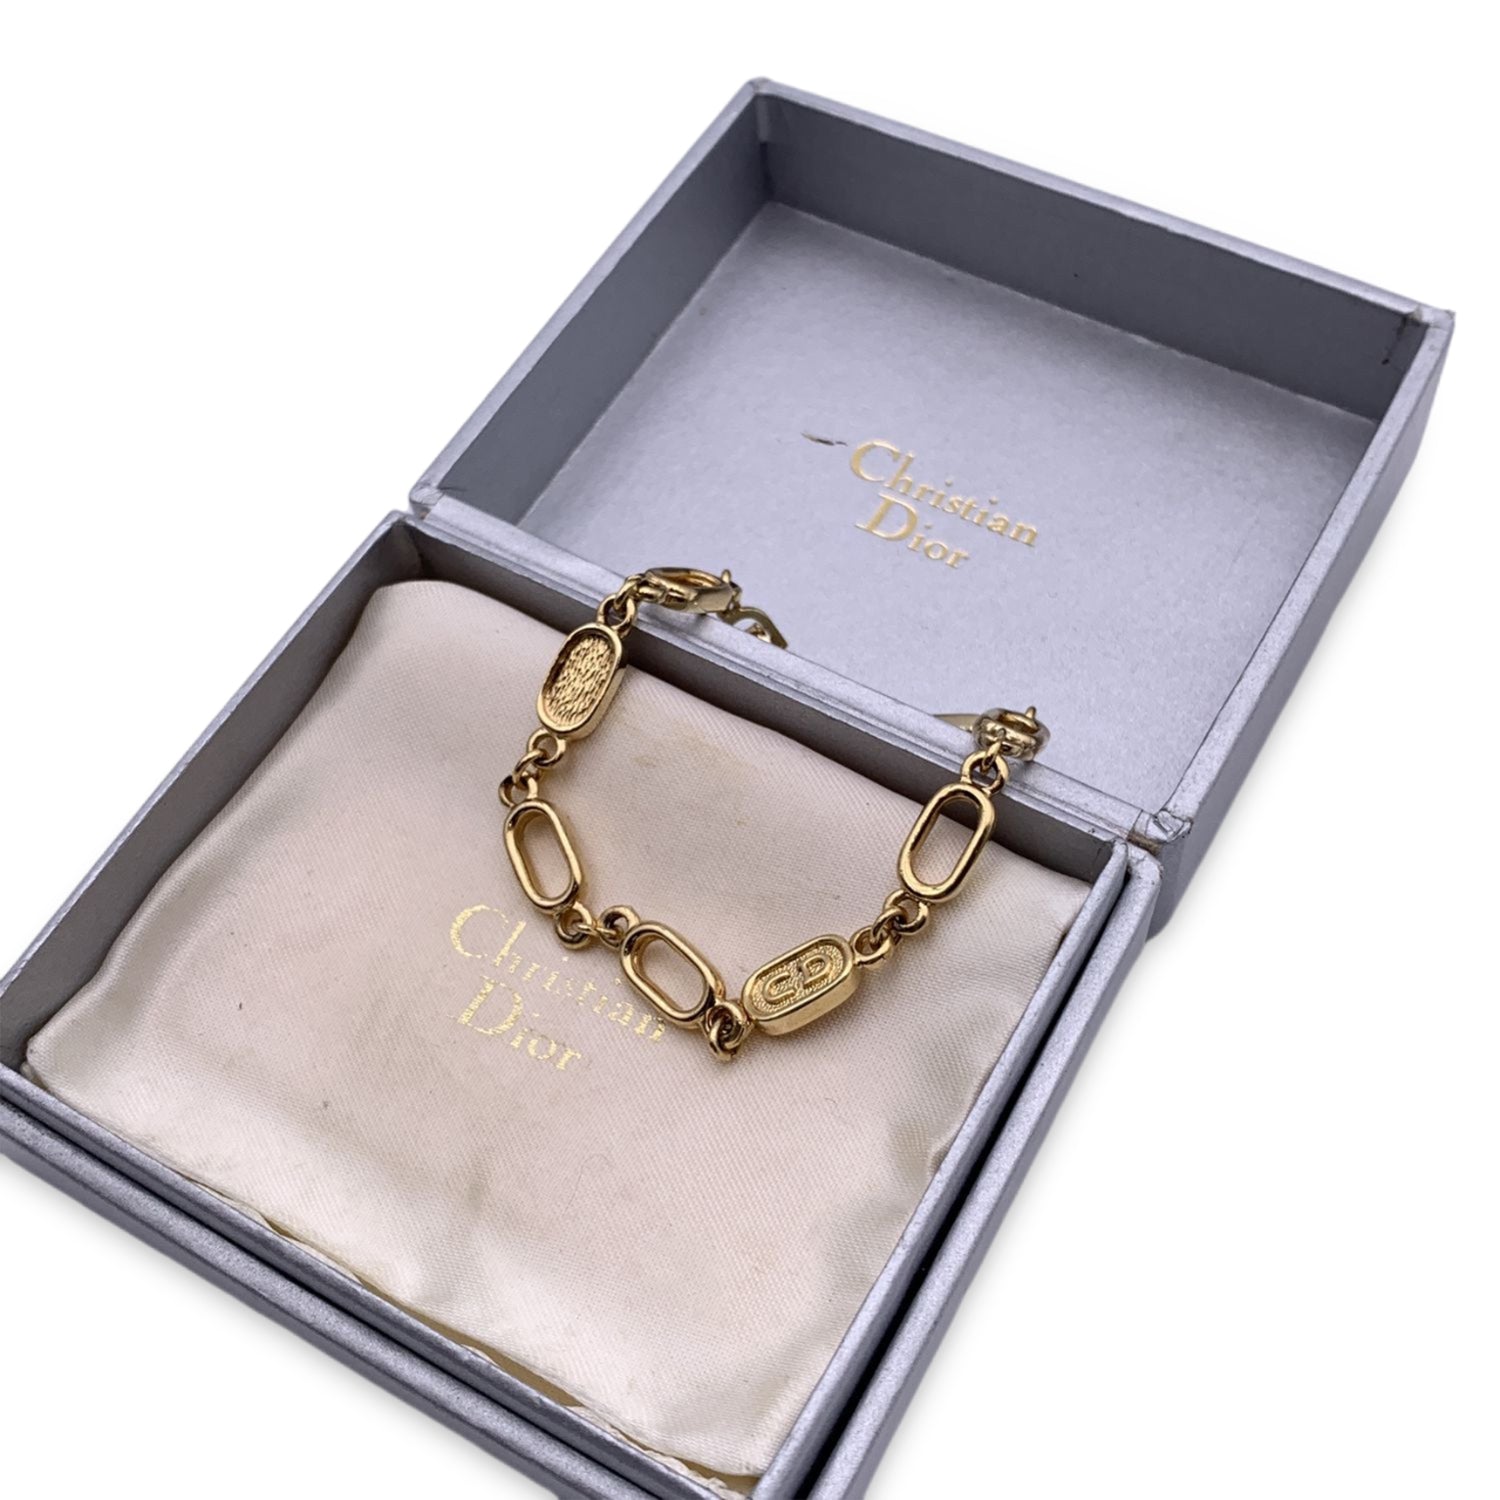 GEM DIOR Bracelet Yellow Gold | DIOR | Dior bracelets, Gems, Dior atelier